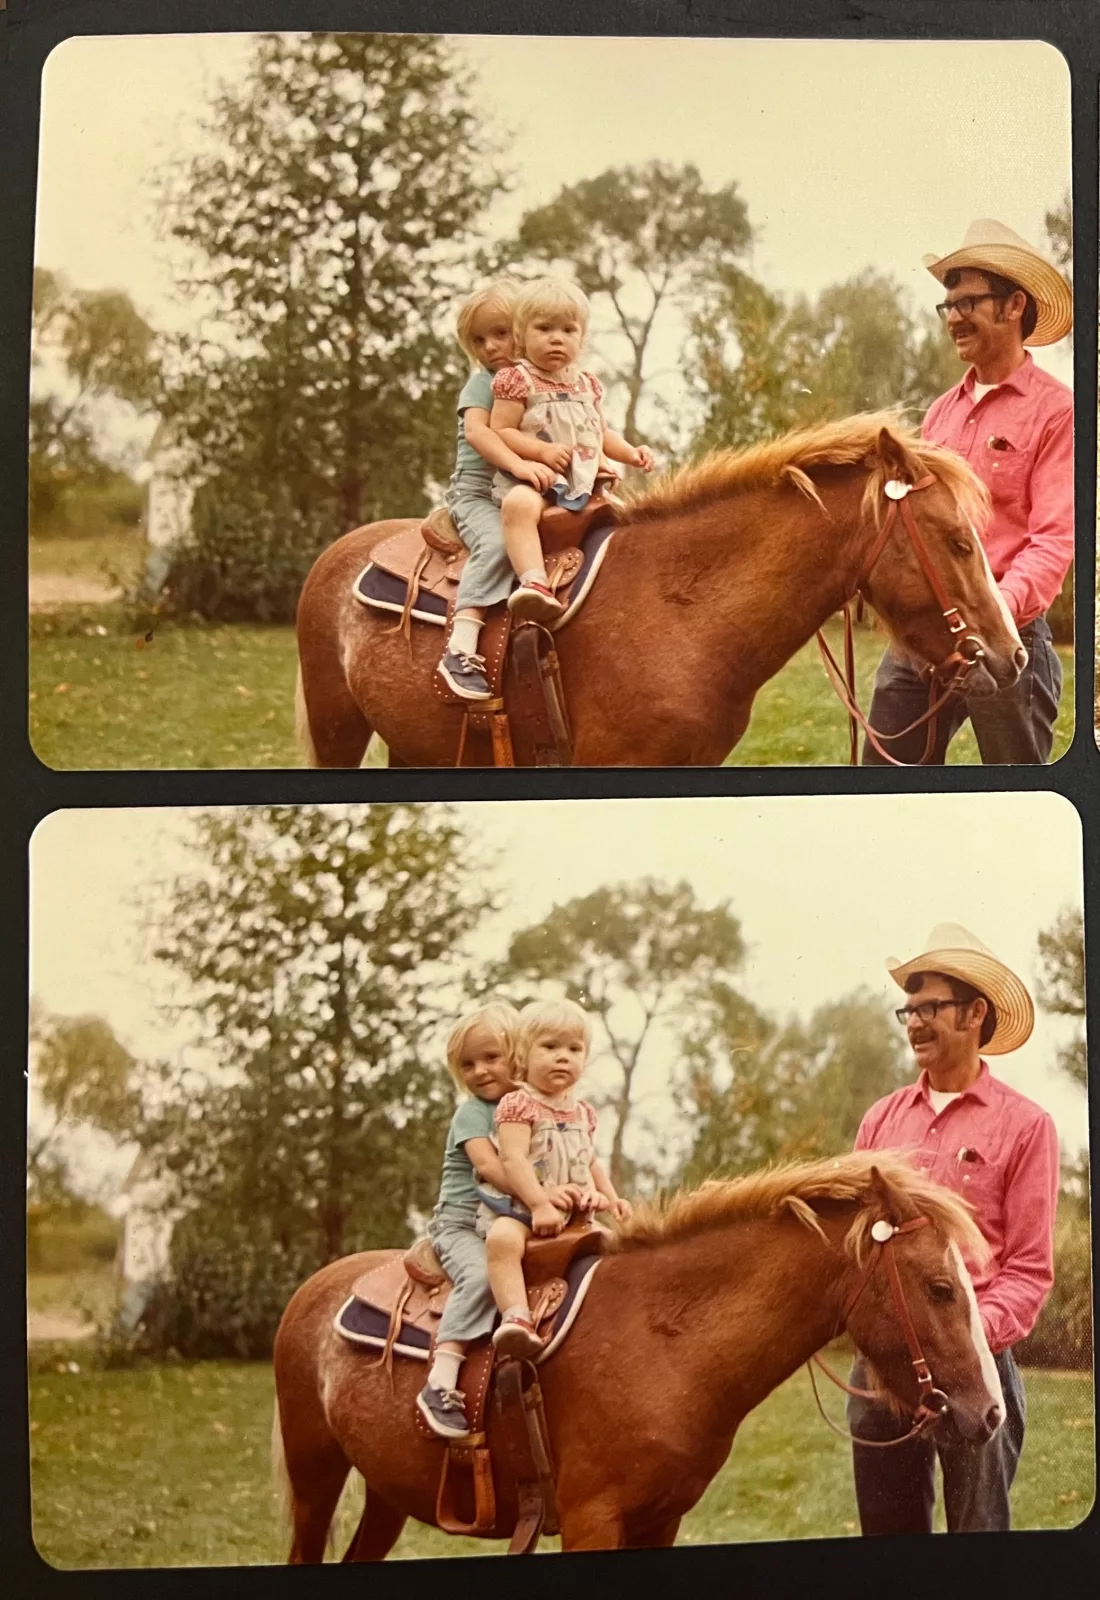 Pony riding in Montana, 1970s